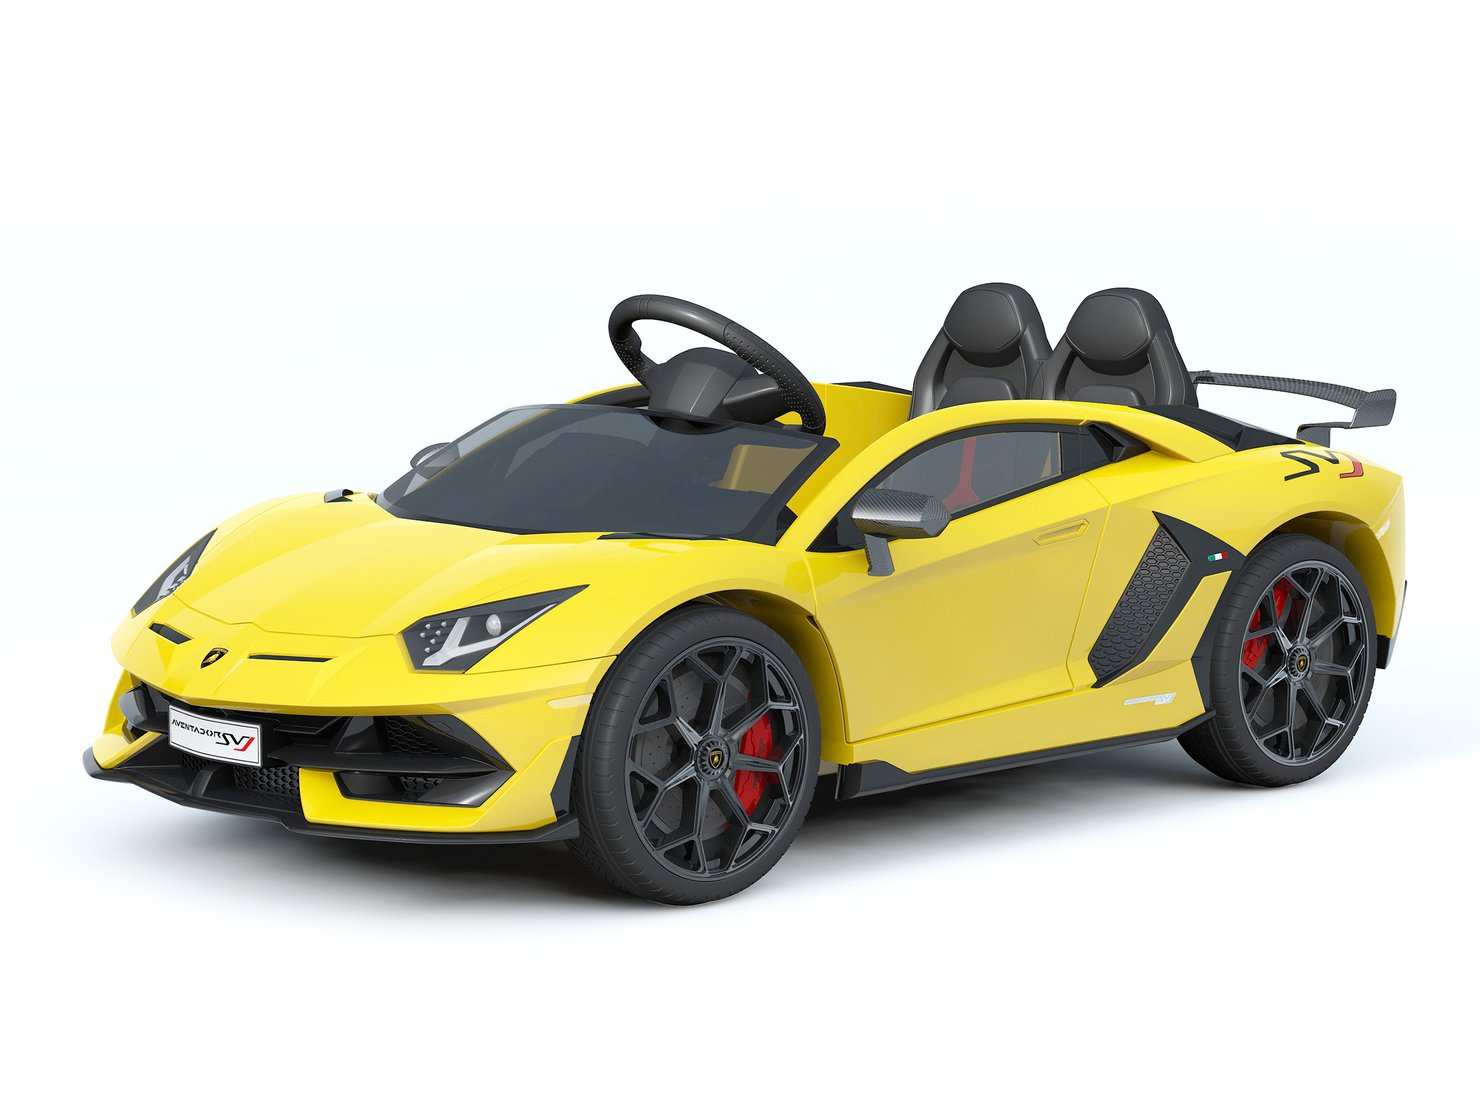 yellow lamborghini toy car